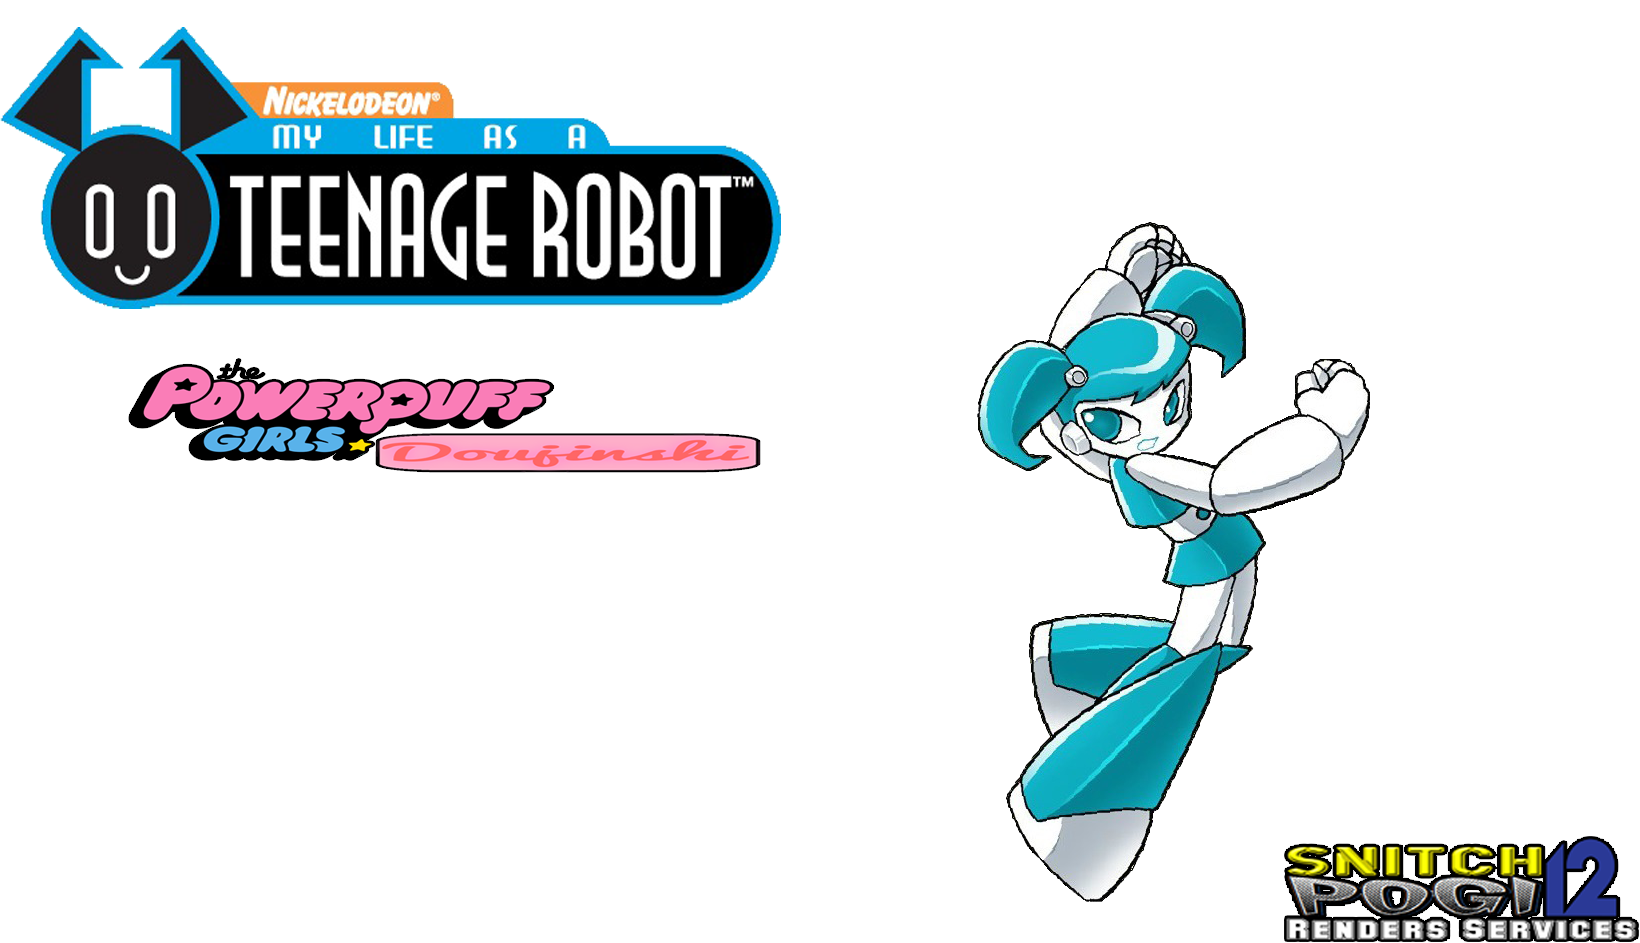 Robotboy Fanart Render by Redrunner613 on DeviantArt